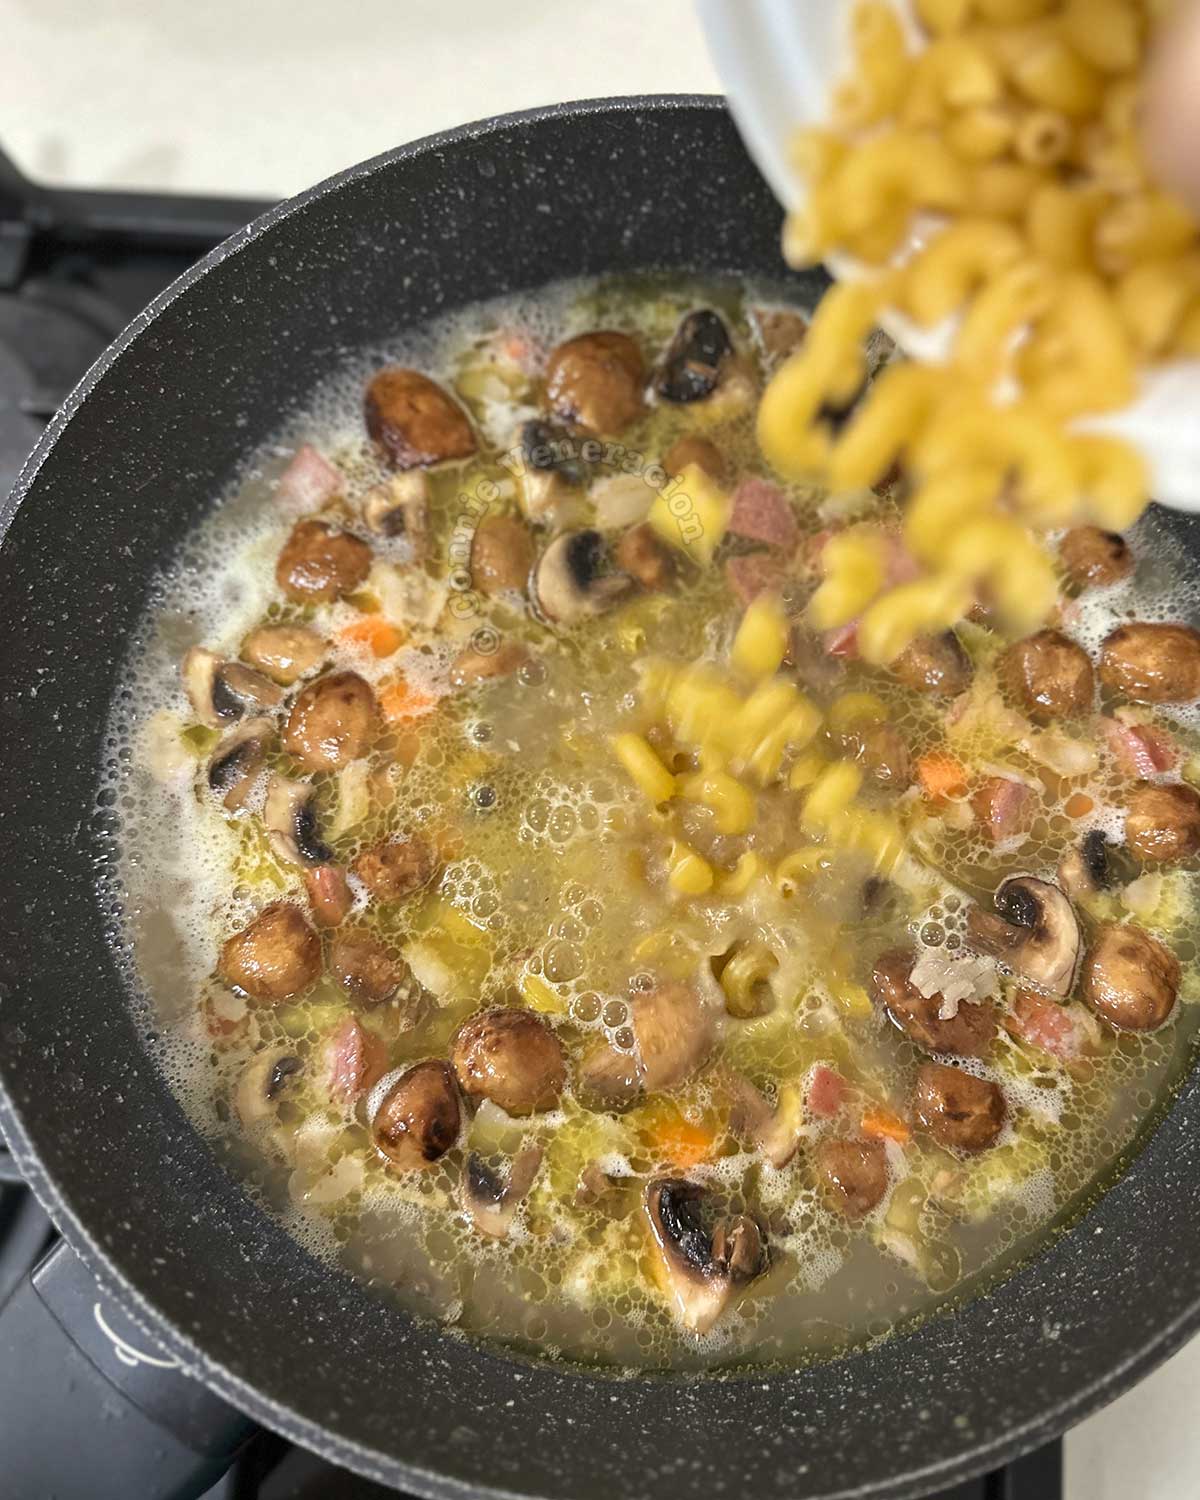 Adding elbow macaroni to soup in pan